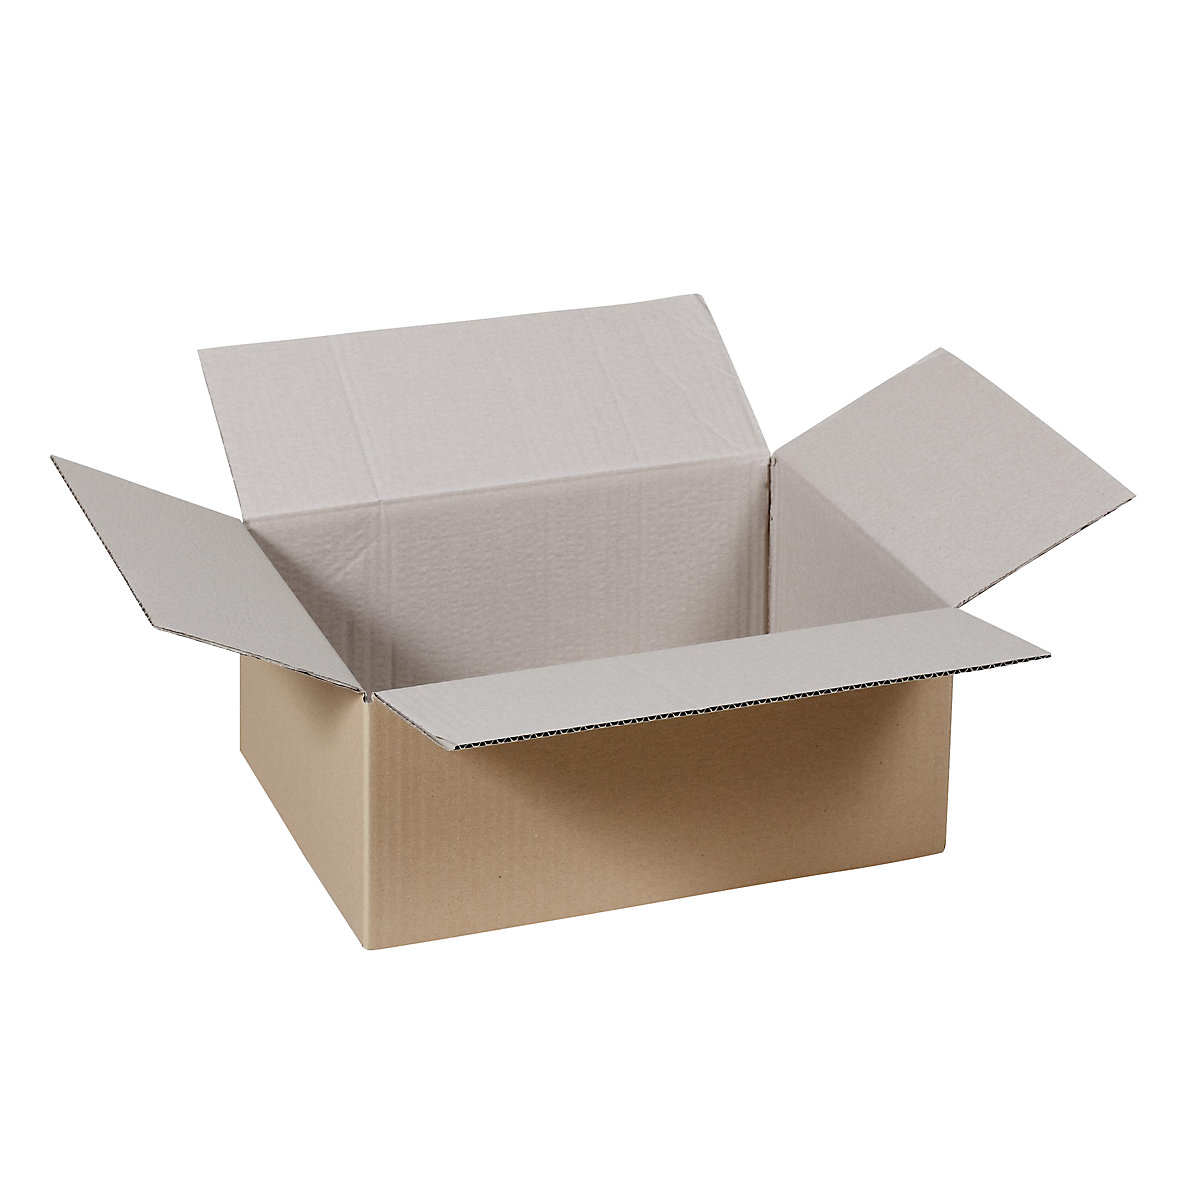 Folding cardboard box, FEFCO 0201, made of single fluted cardboard, internal dimensions 300 x 250 x 200 mm, pack of 50-6